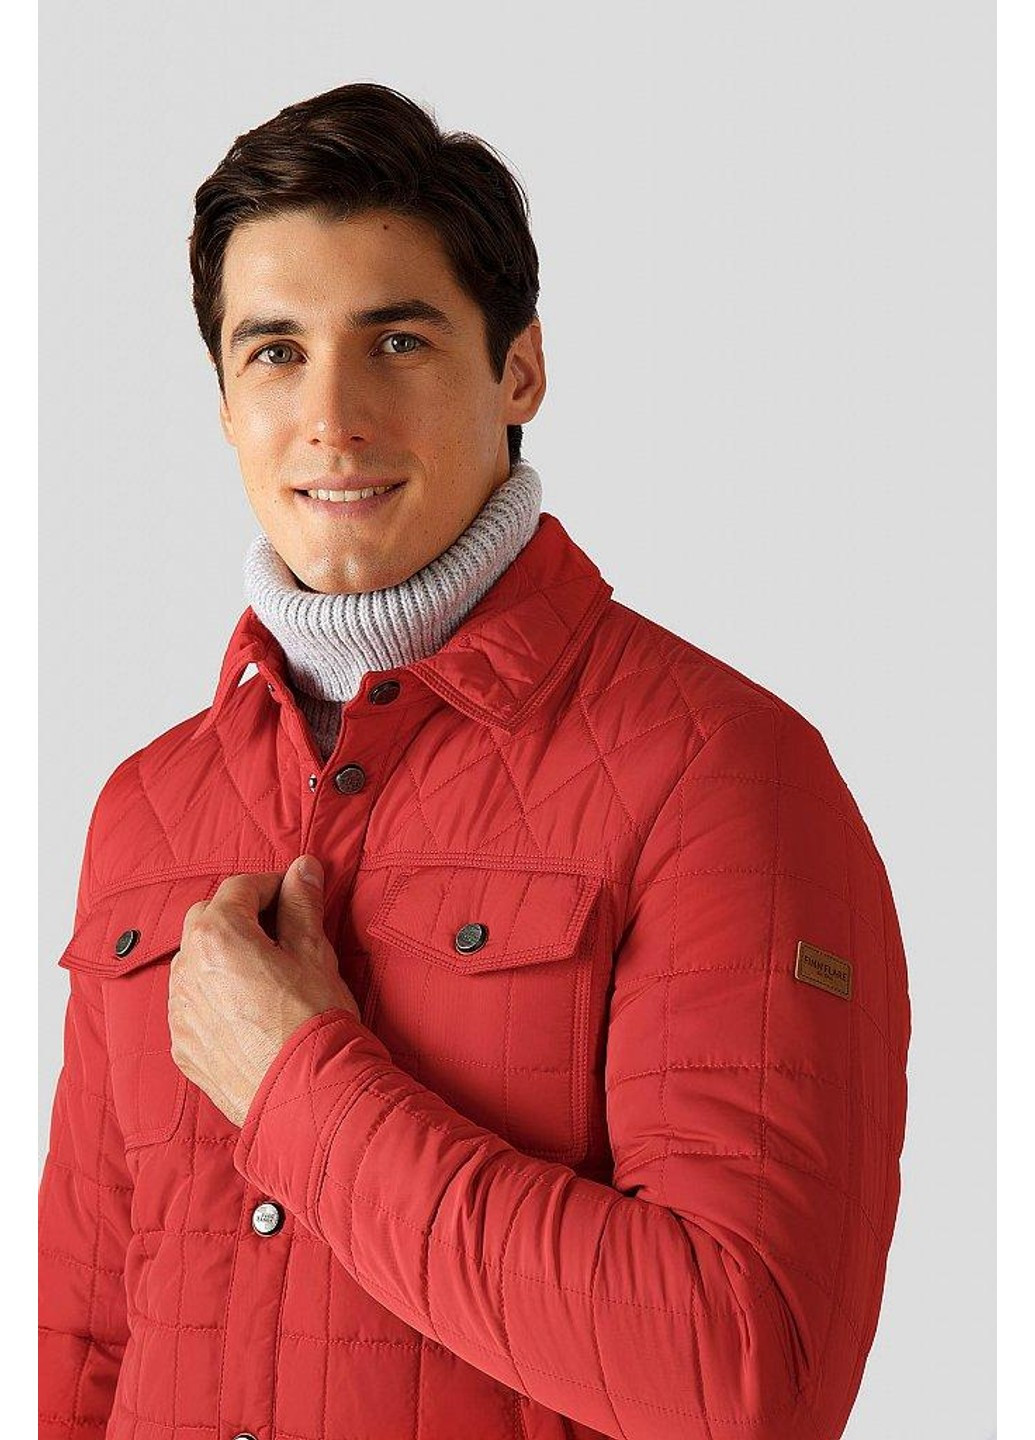 Красная демисезонная куртка-рубашка a18-22020-101 Finn Flare